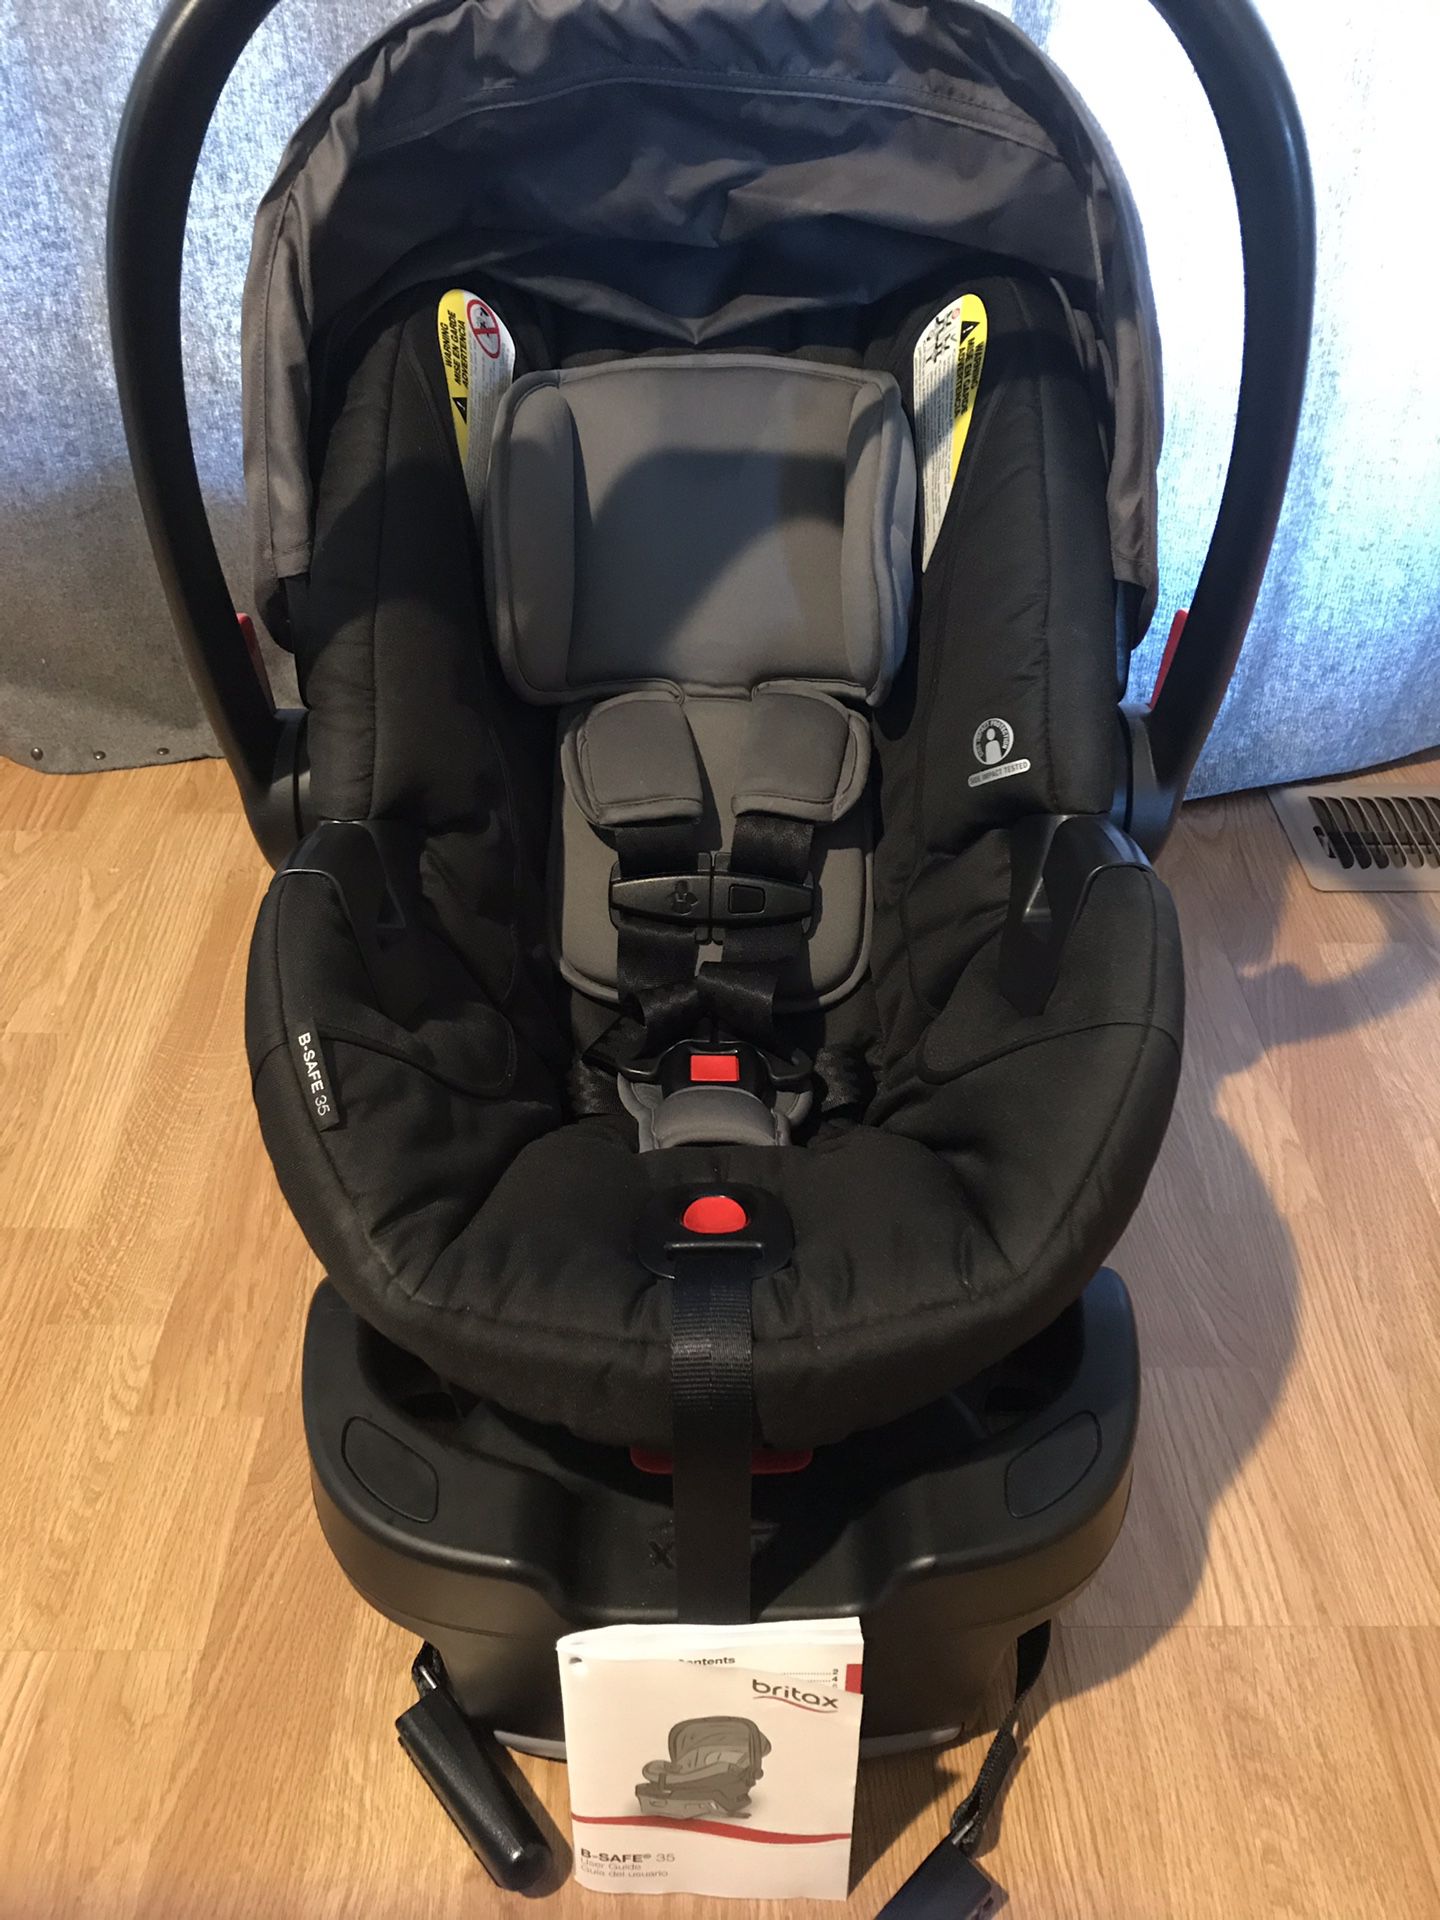 BRITAX B-SAFE 35 Infant Car Seat-practically NEW!